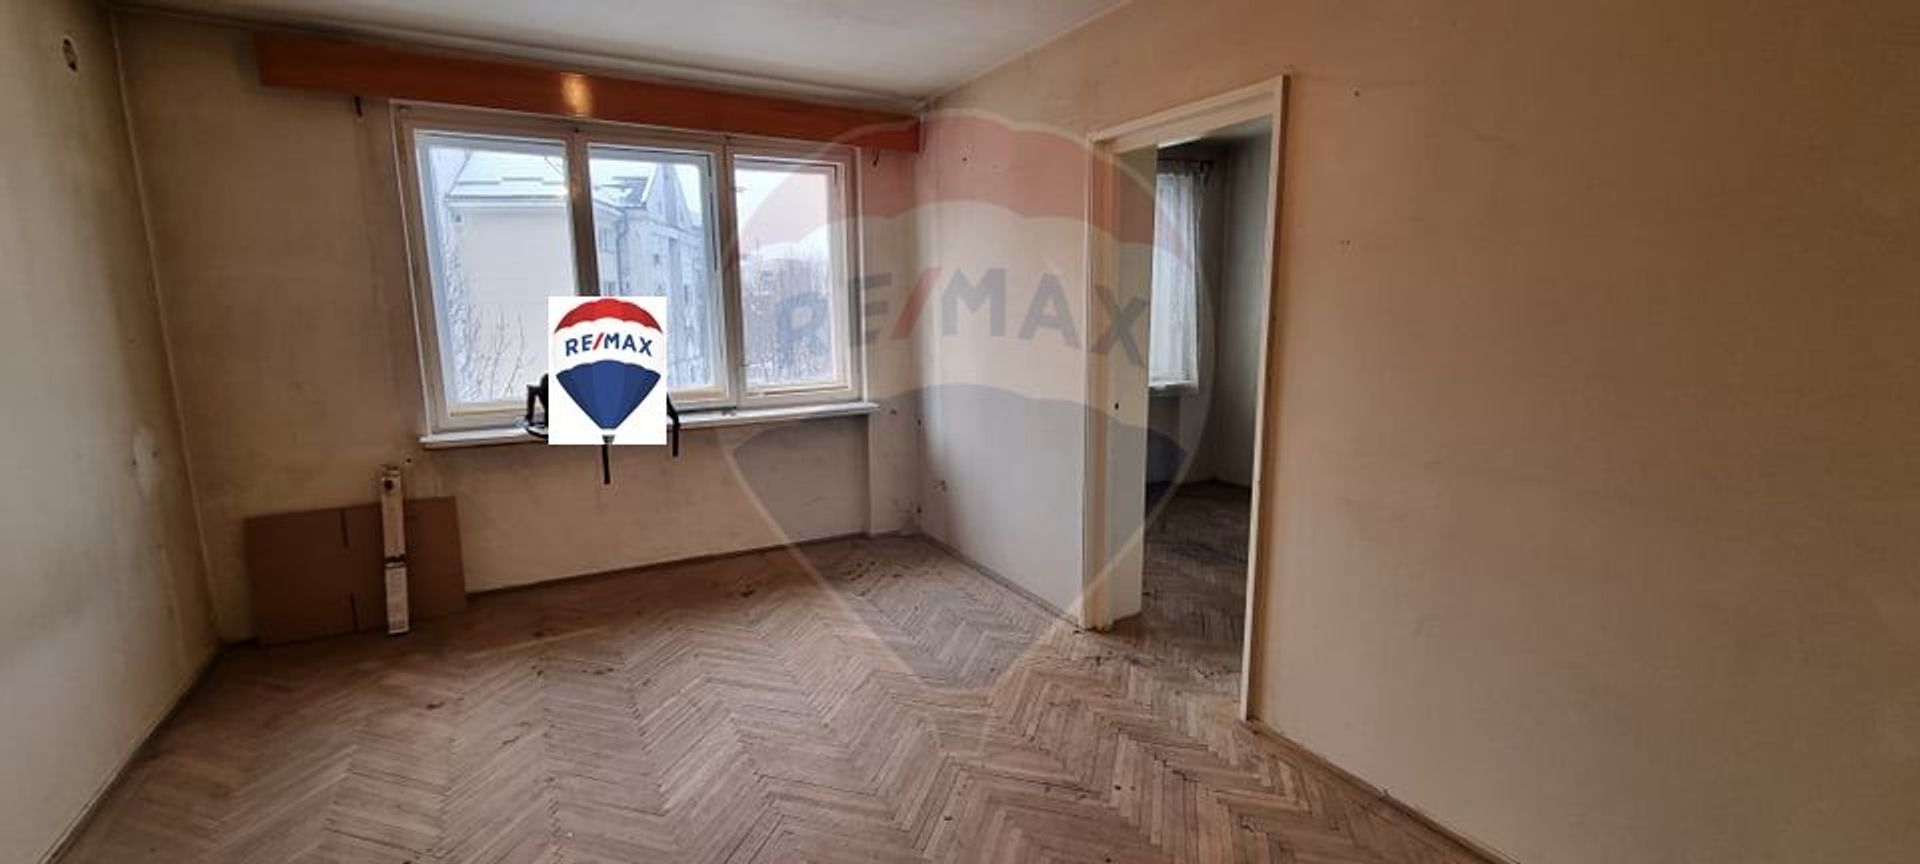 Apartament 4 camere vanzare in bloc de apartamente Maramures, Baia Mare, Sasar